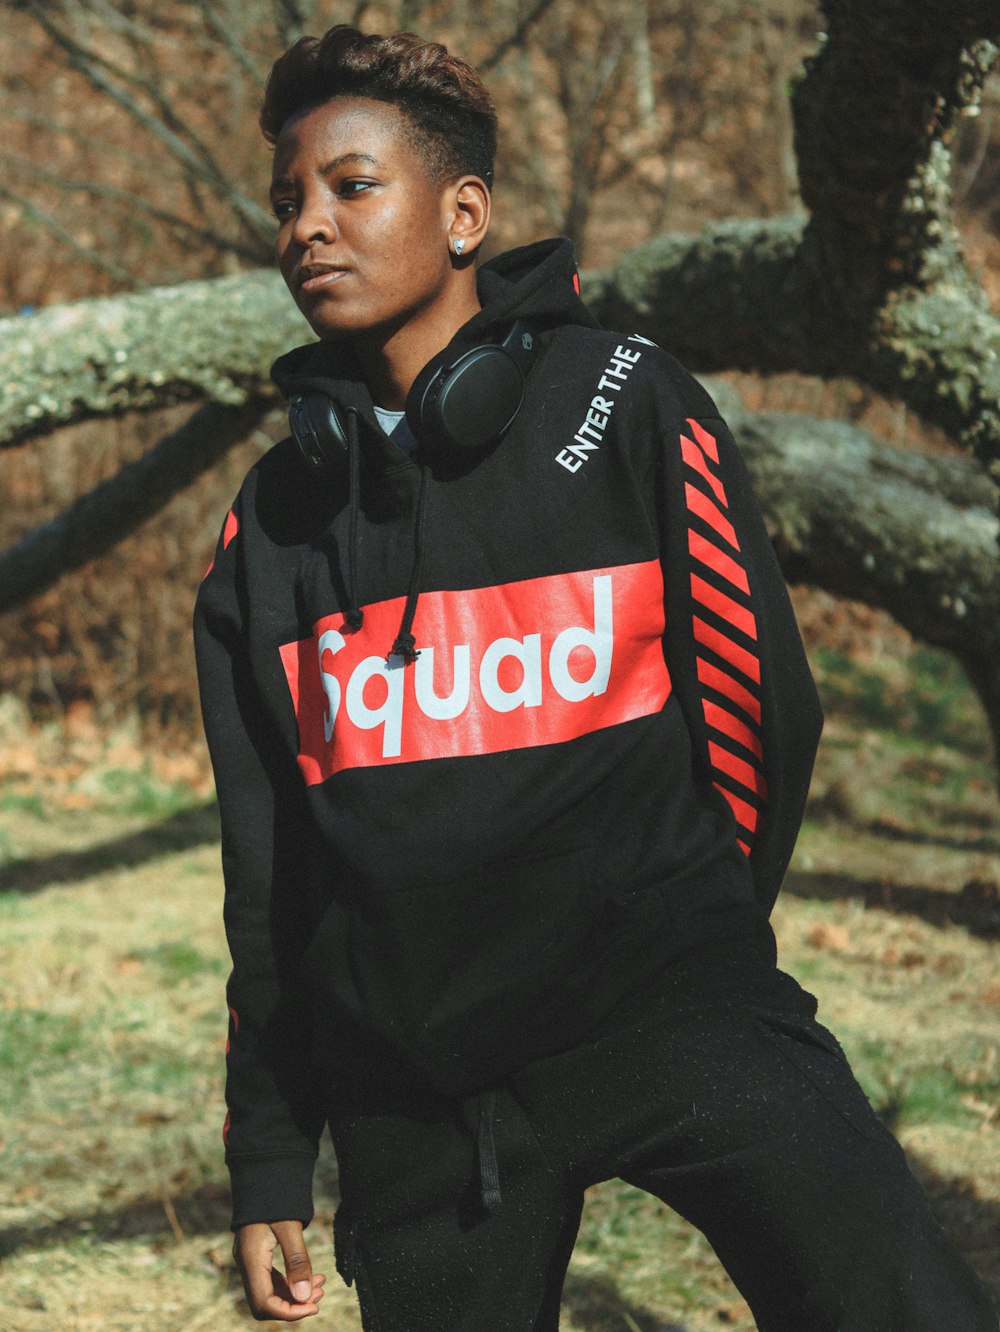 Man in black and red adidas jacket wearing black headphones photo – Free  Athletic girl Image on Unsplash